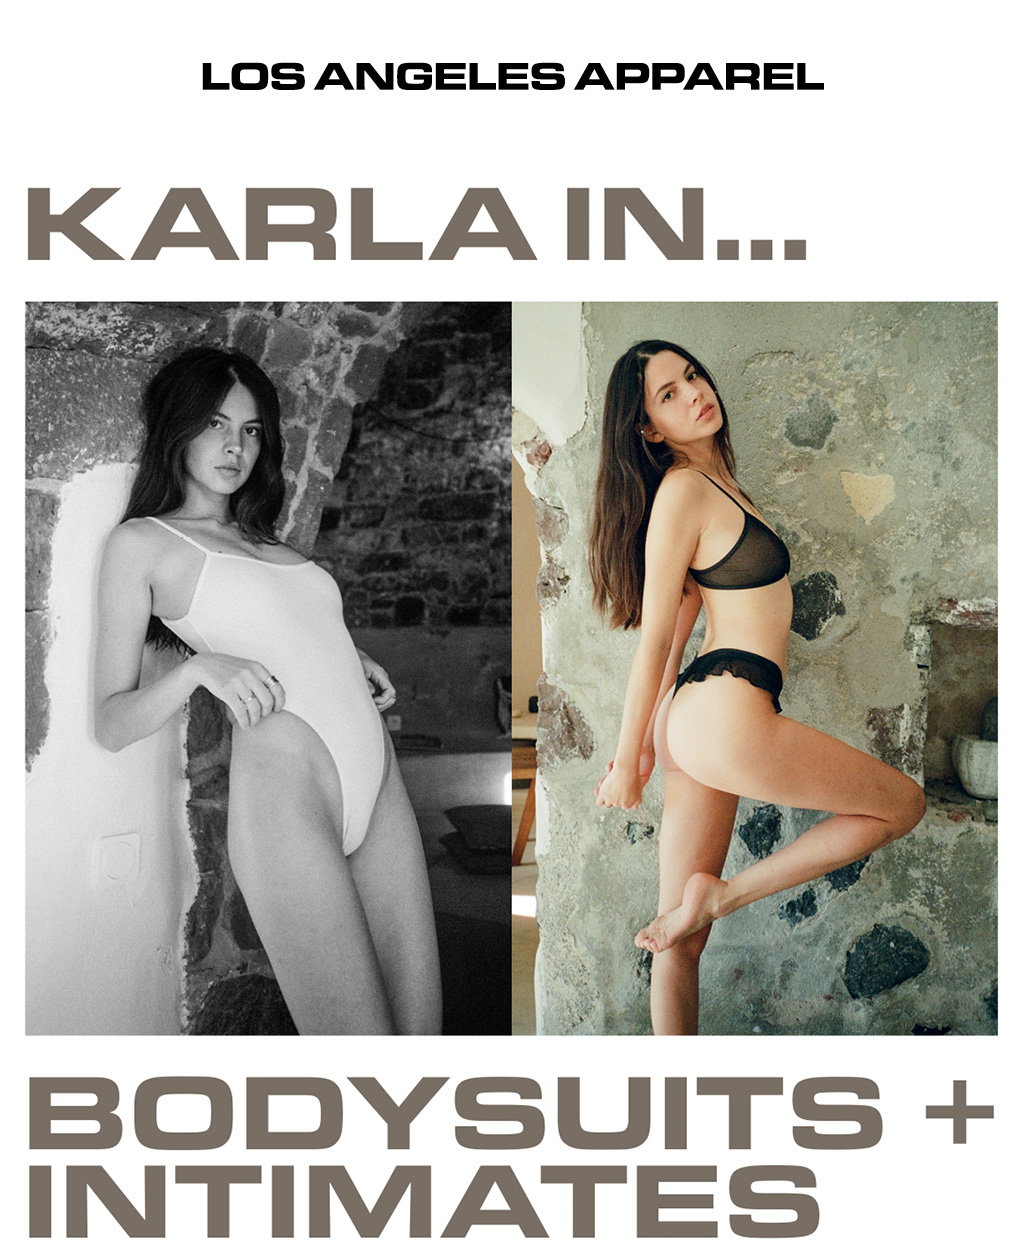 Los Angeles Apparel: Karla in Bodysuits + Intimates